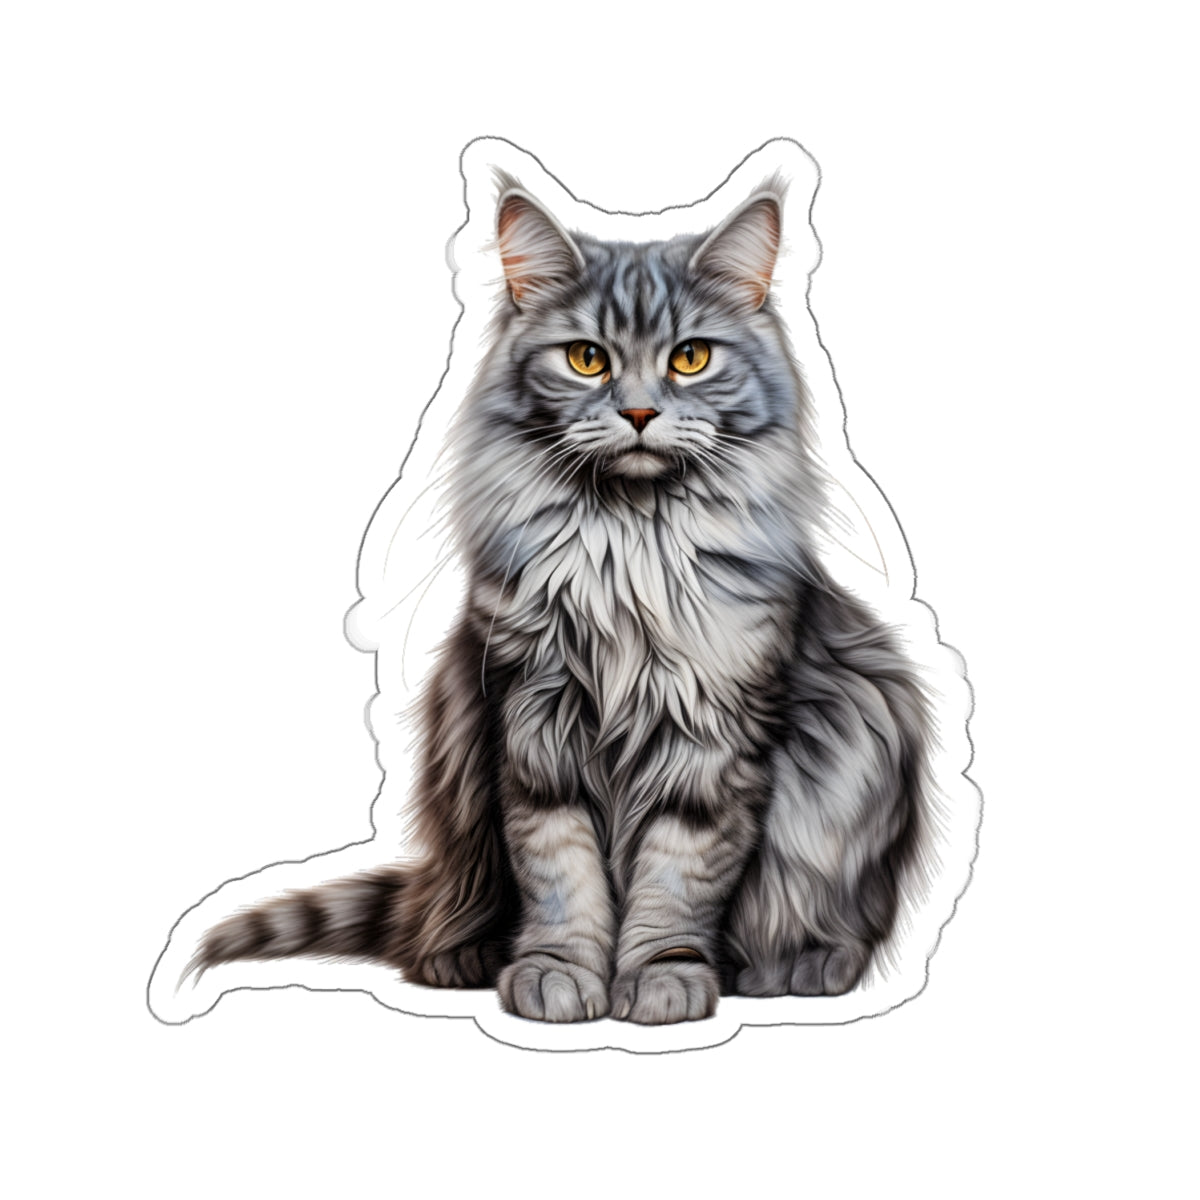 Gray Cat Sticker